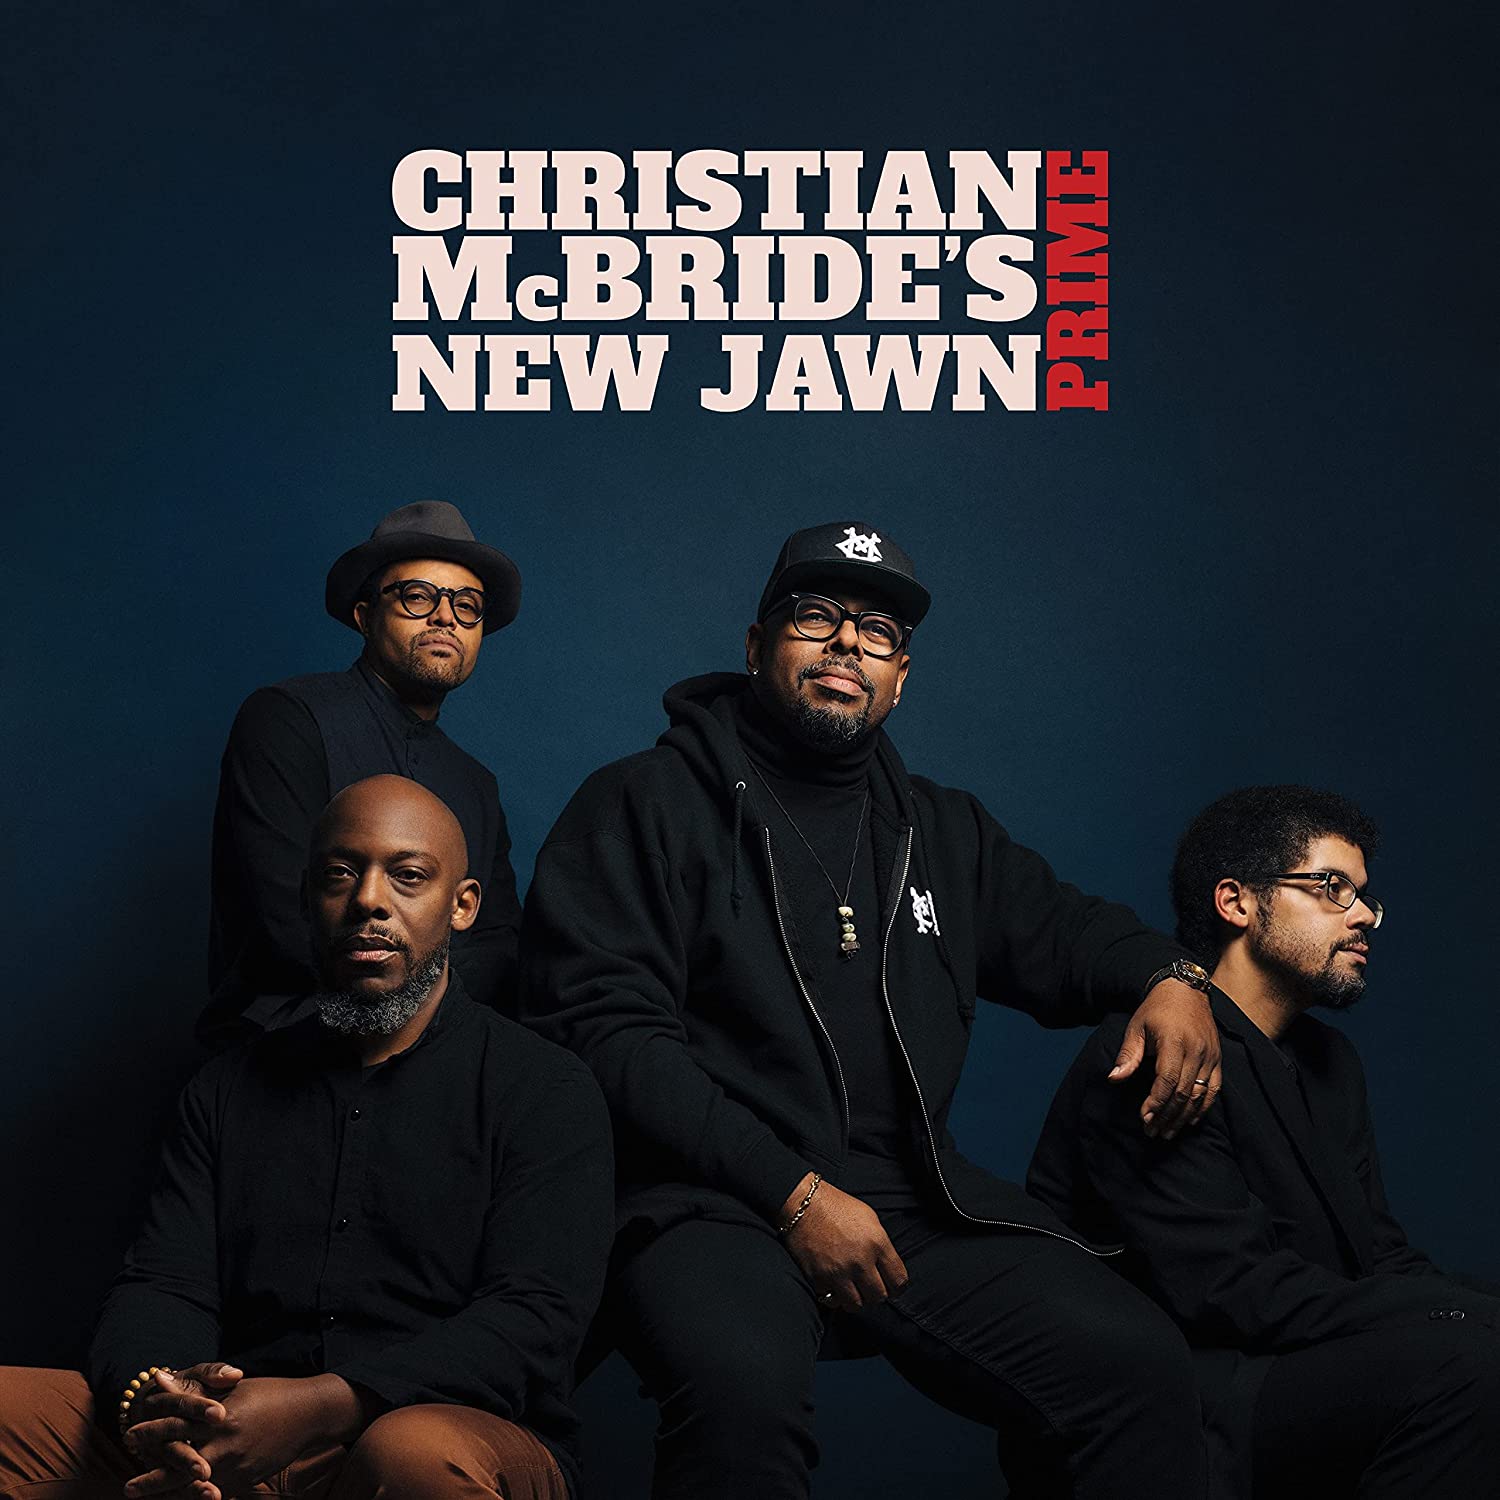 CHRISTIAN MCBRIDE - Christian McBride's New Jawn : Prime cover 